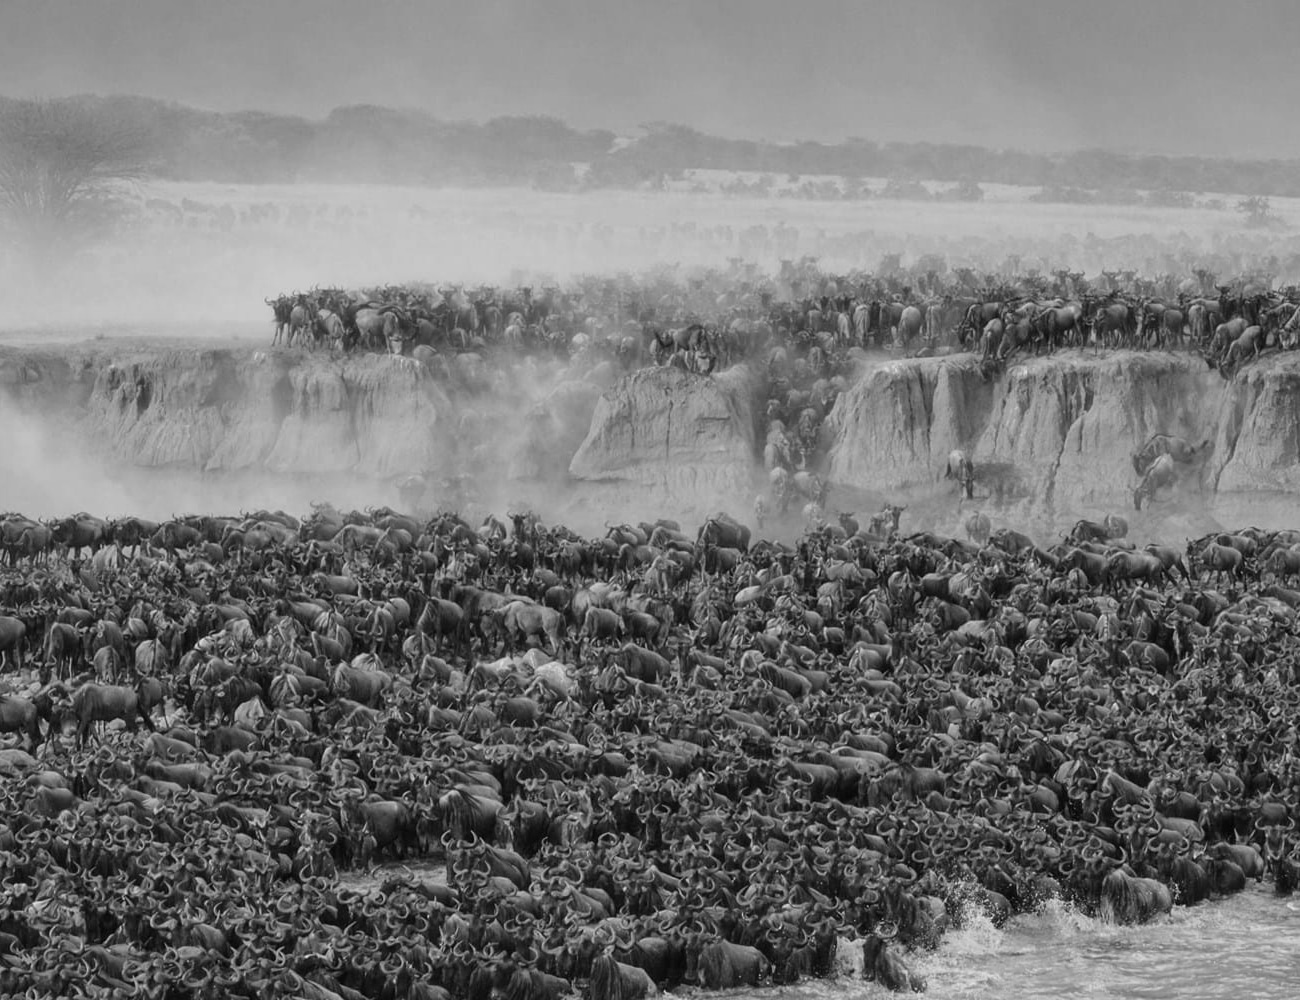 The Great Wildebeest Migration